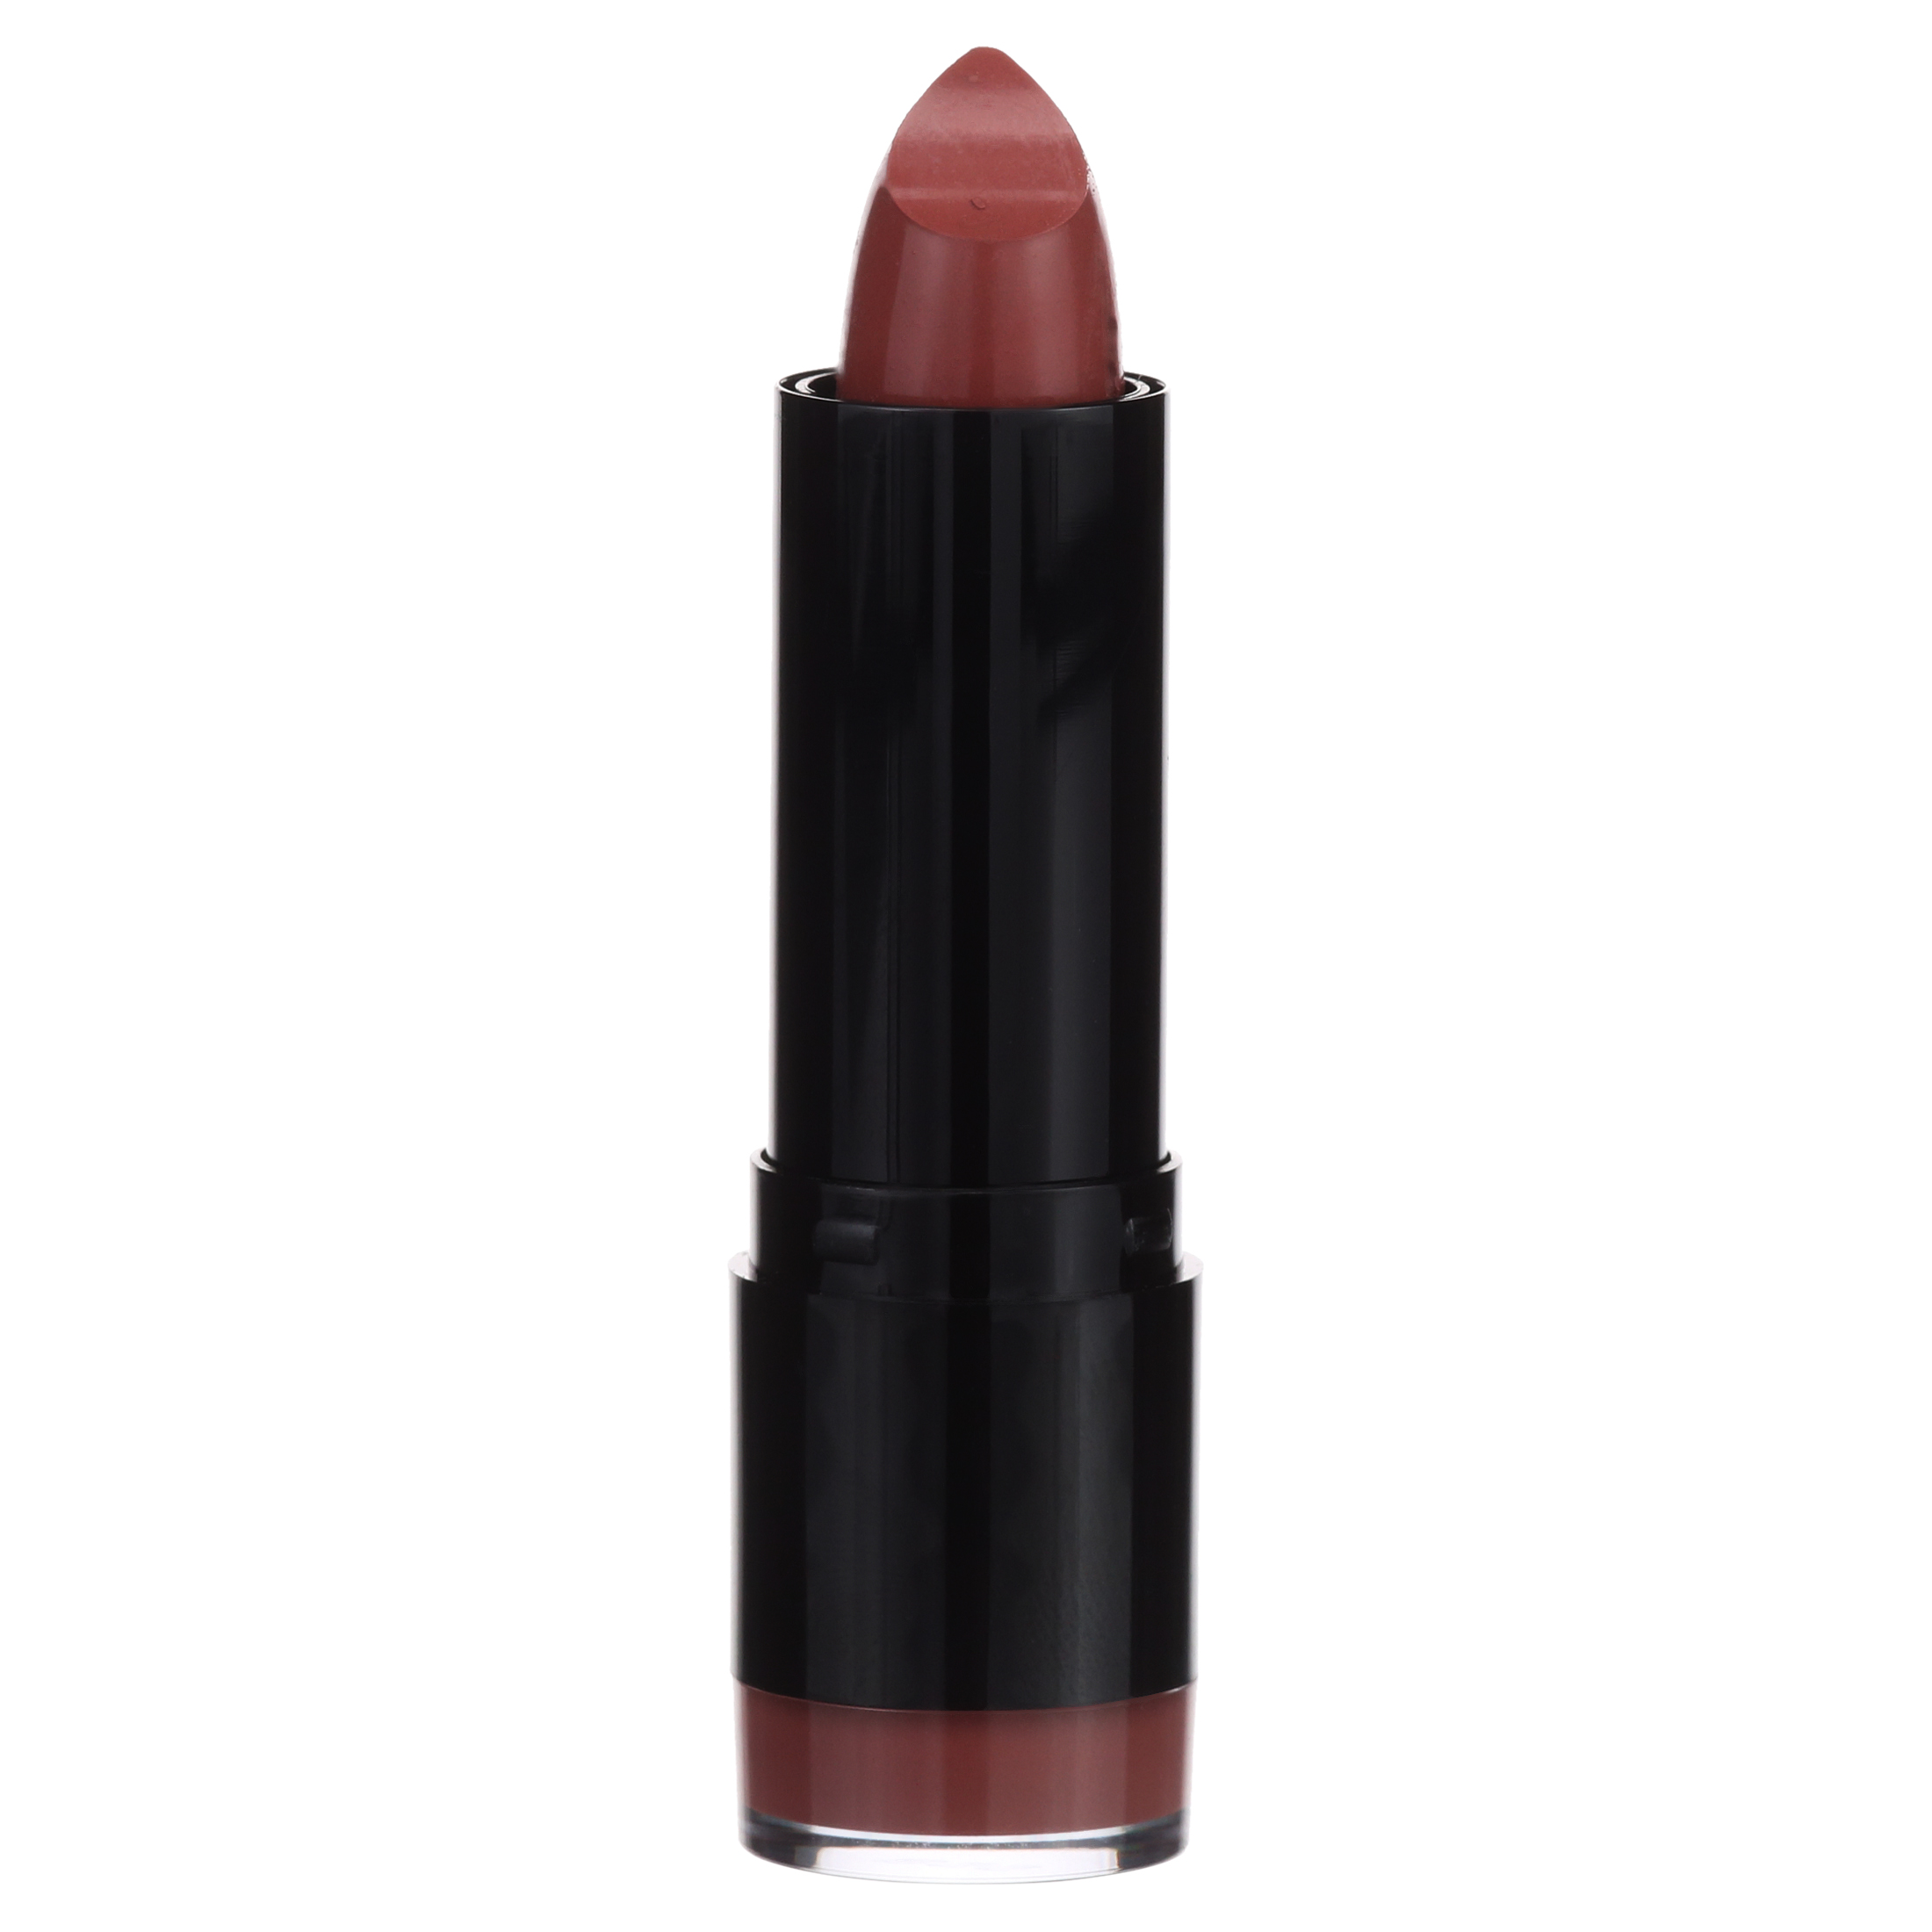 NYX Professional Makeup Extra Creamy Round Lipstick, Cocoa - image 3 of 9